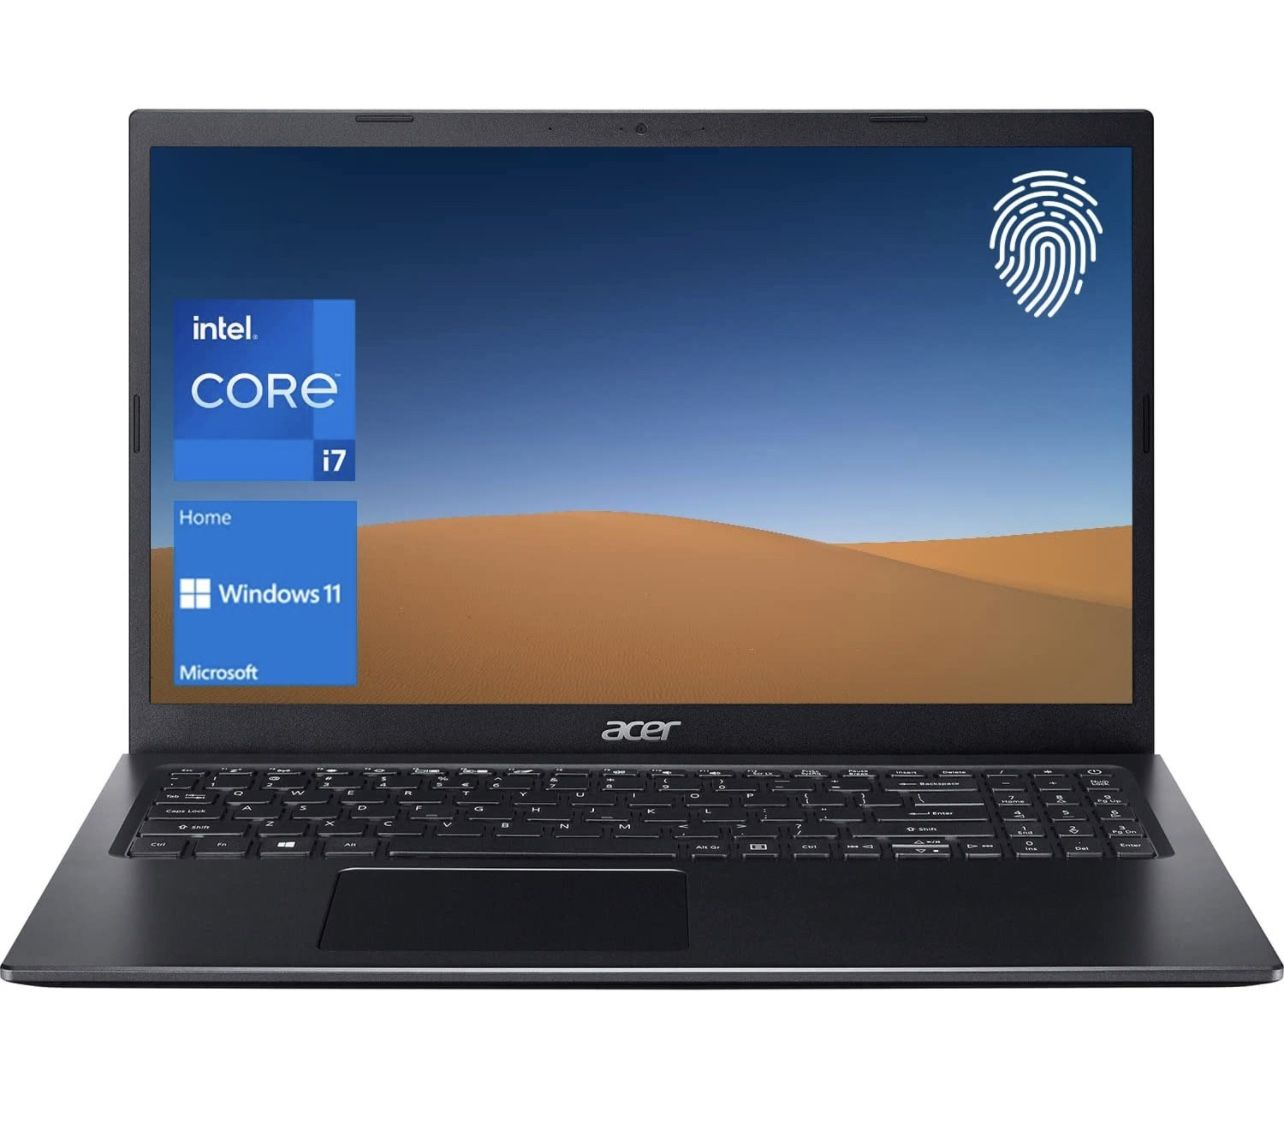 Acer Aspire 5 15.6 FHD Notebook Laptop, Intel Core i7-1165G7 Processor, 20GB RAM, 1TB PCIe SSD, Webcam, Backlit Keyboard, Fingerprint Reader, Wi-Fi 6,